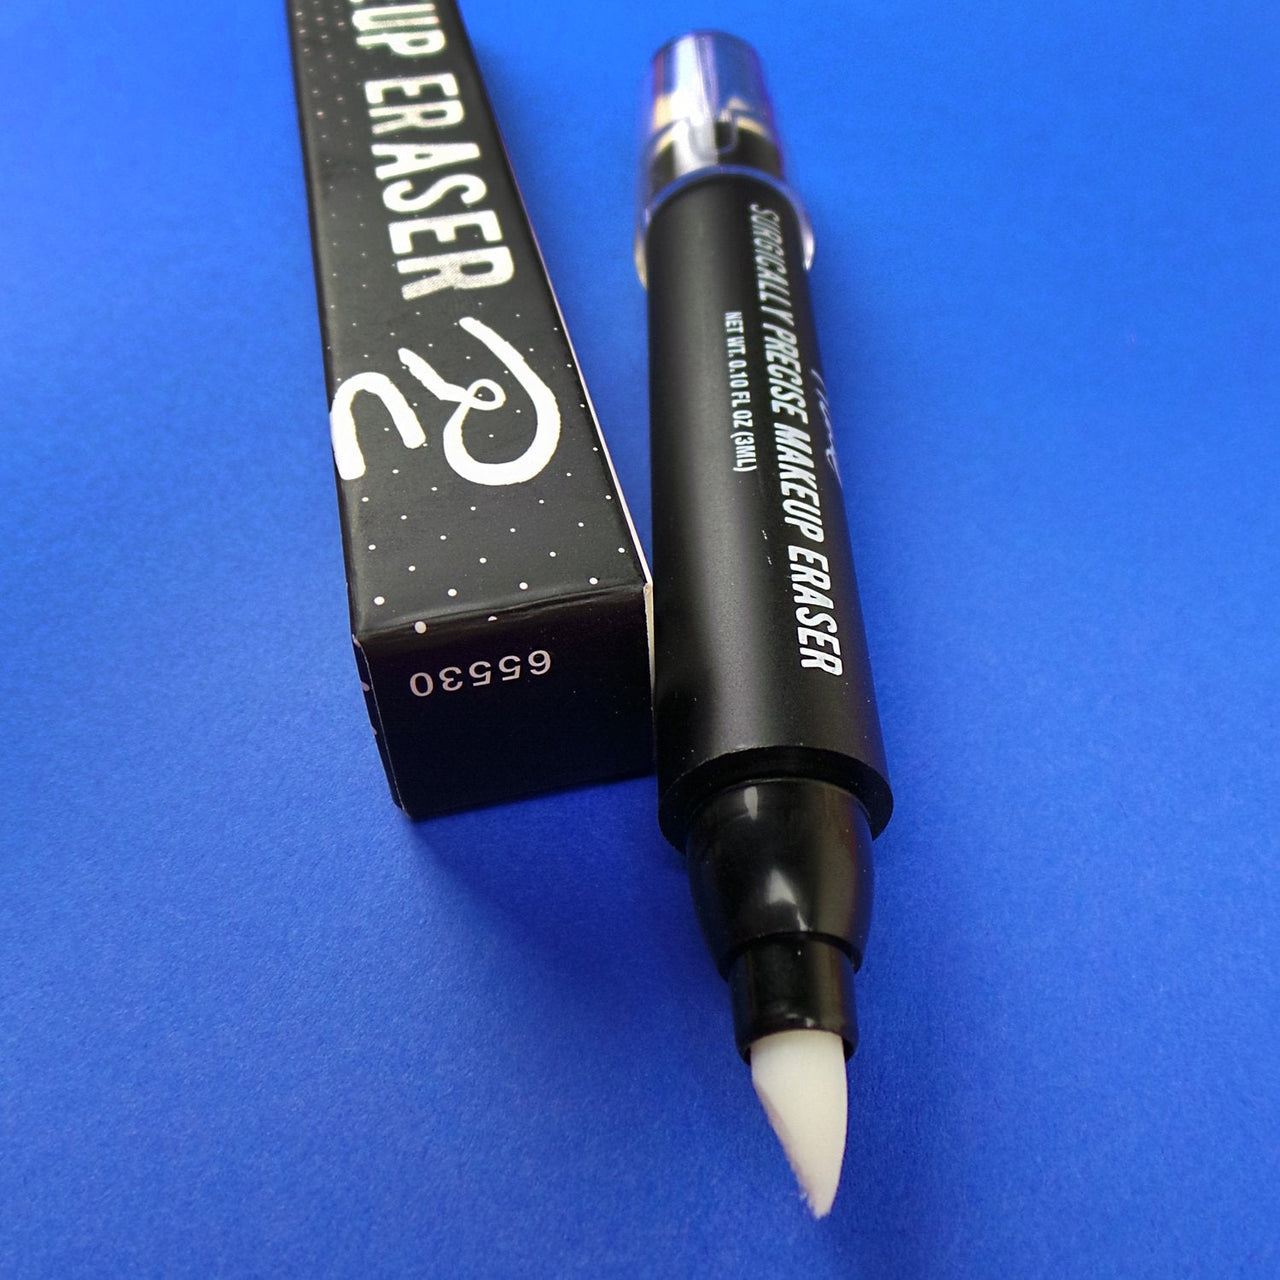 RUDE Surgically Precise Makeup Eraser Display Set, 24 Pieces